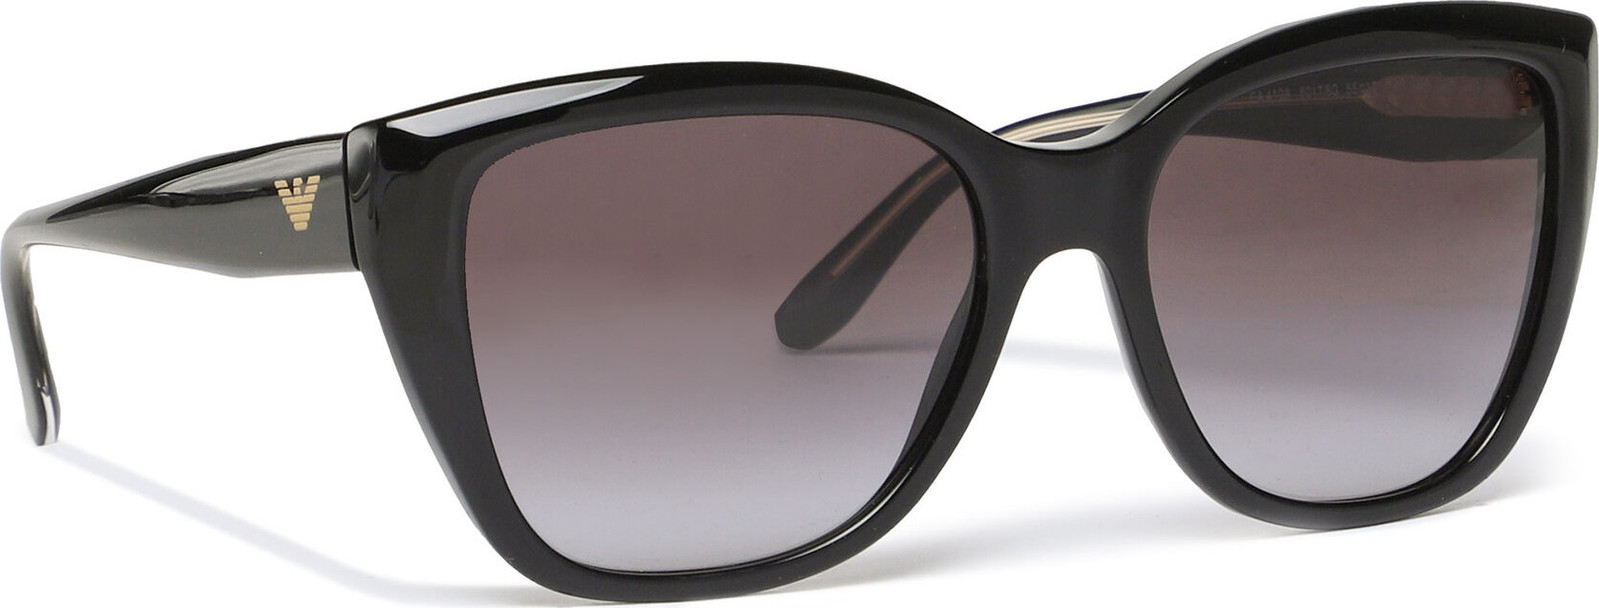 Sluneční brýle Emporio Armani 0EA4198 50178G Black